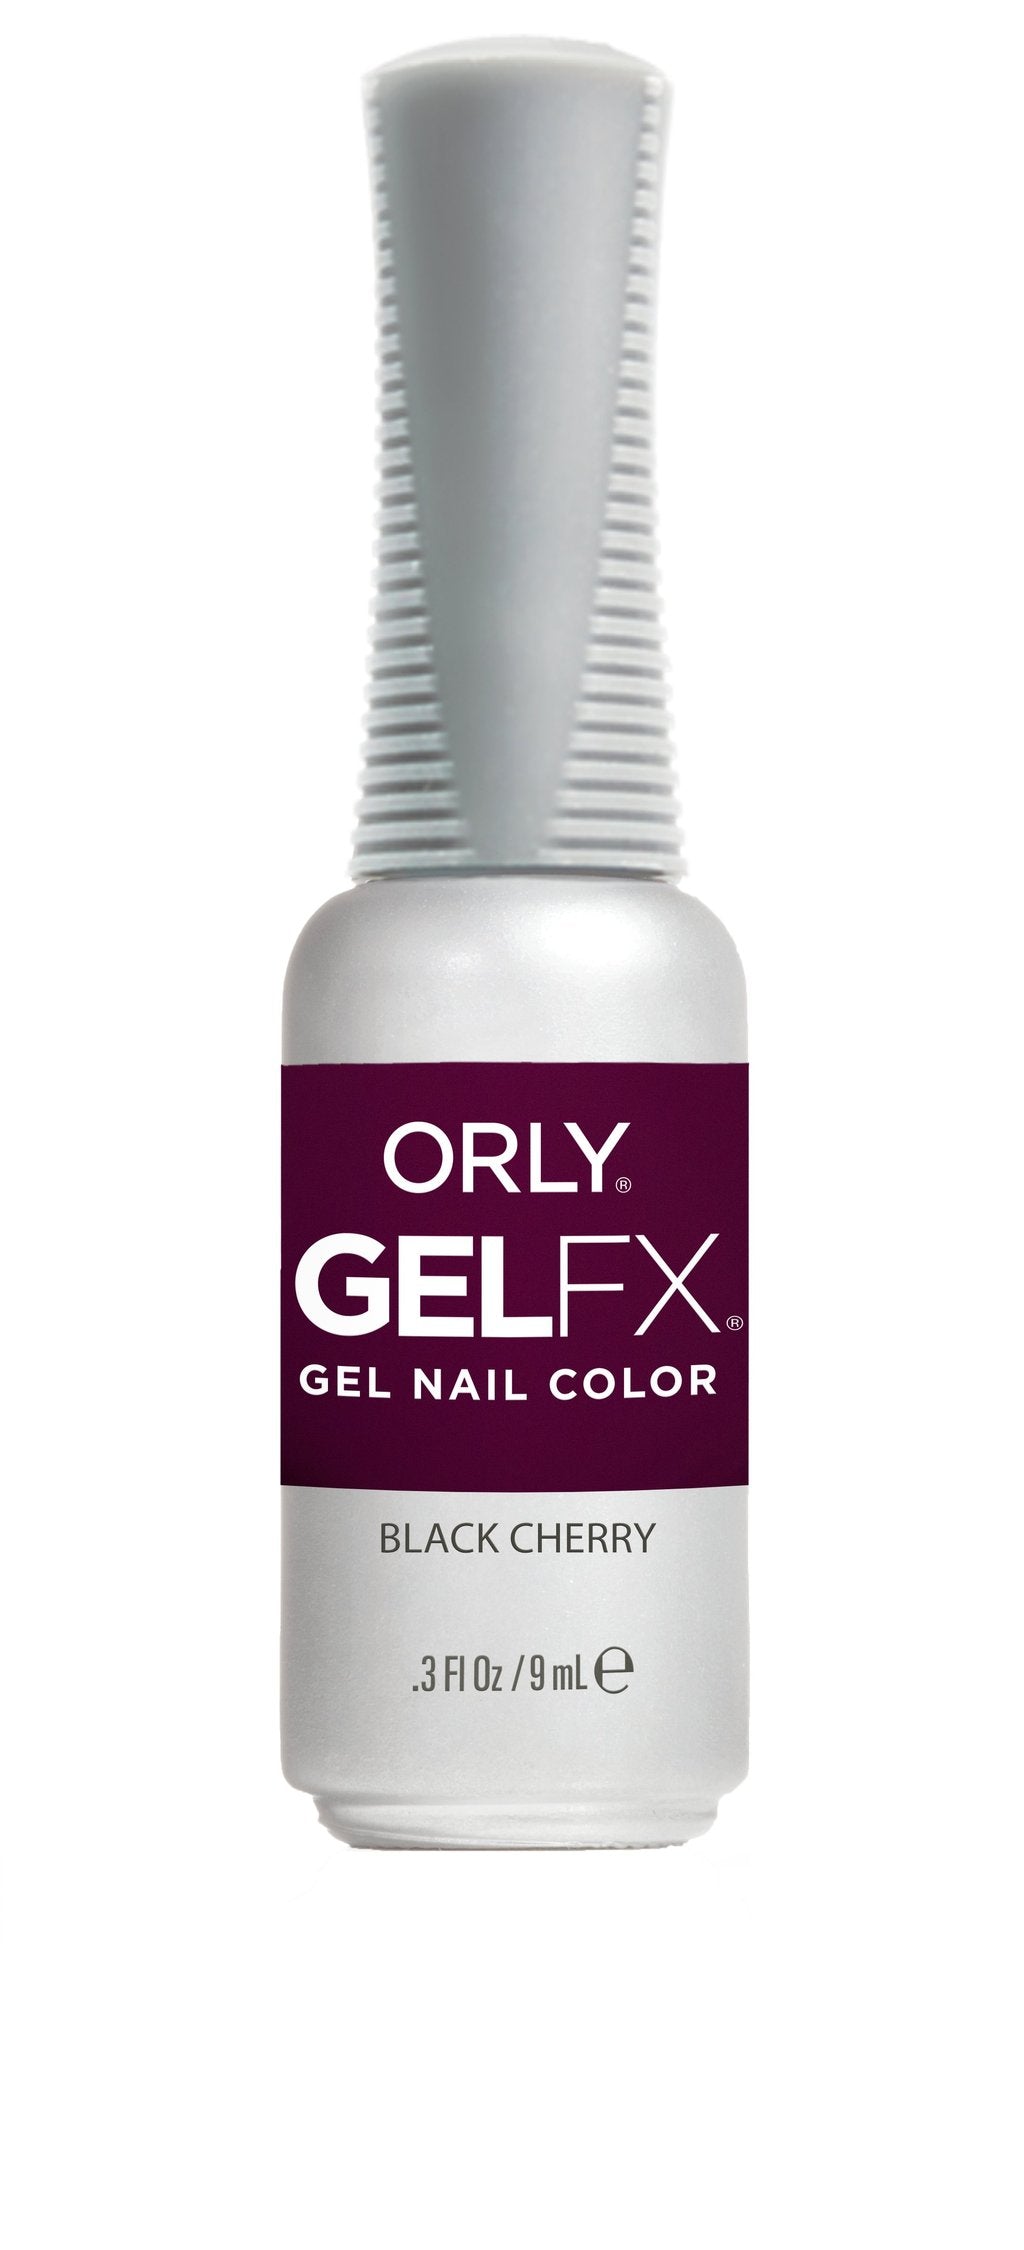 Orly GelFX Black Cherry .3 fl oz 30936